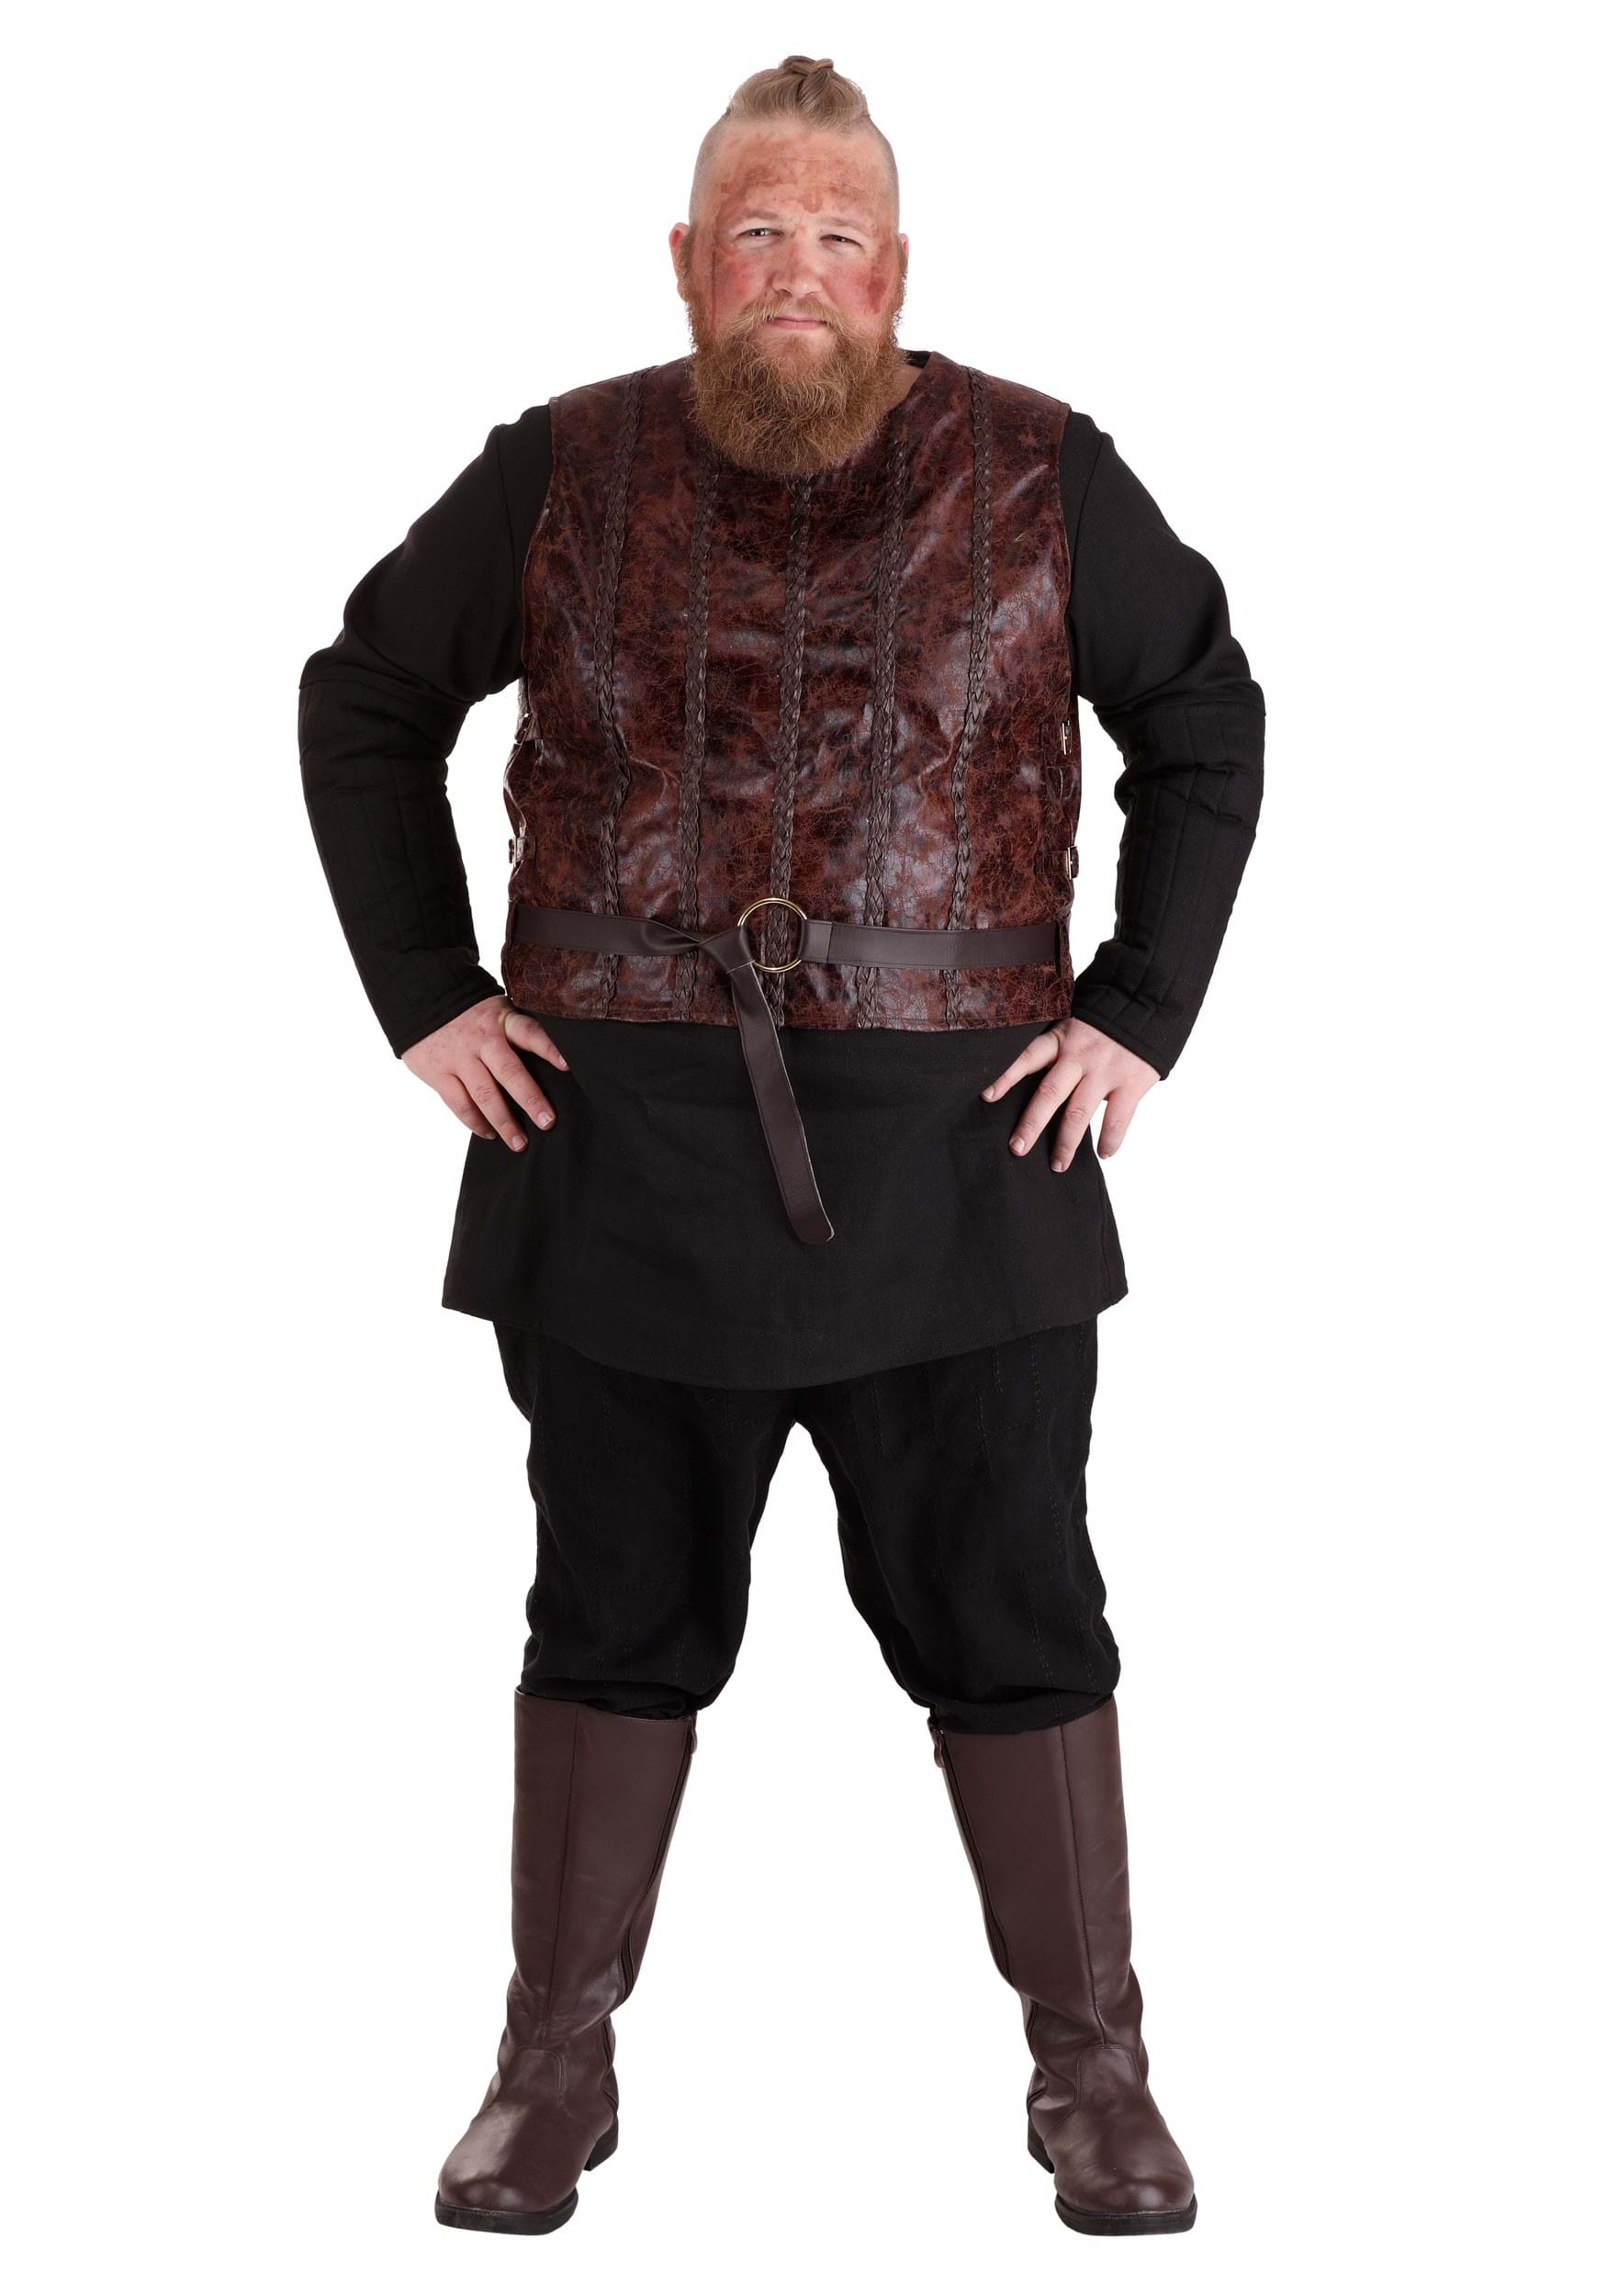 Photos - Fancy Dress FUN Costumes Plus Size Vikings Bjorn Ironside Costume for Adults Black/